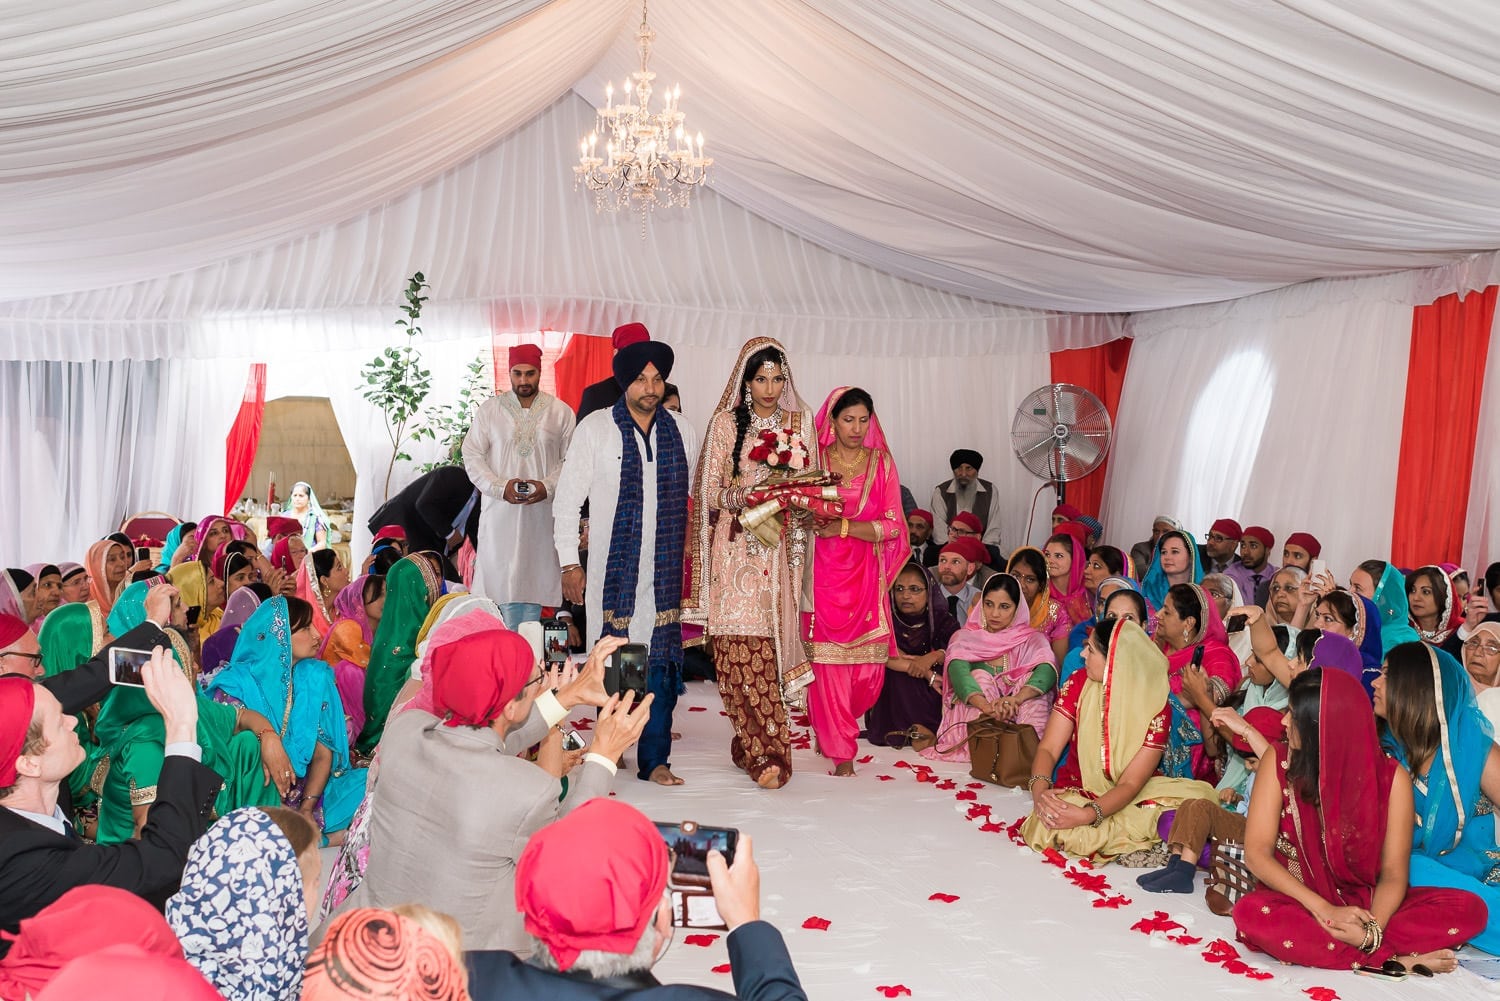 Brides entrance, Indian and Norwegian wedding | Vancouver Indian wedding photographer